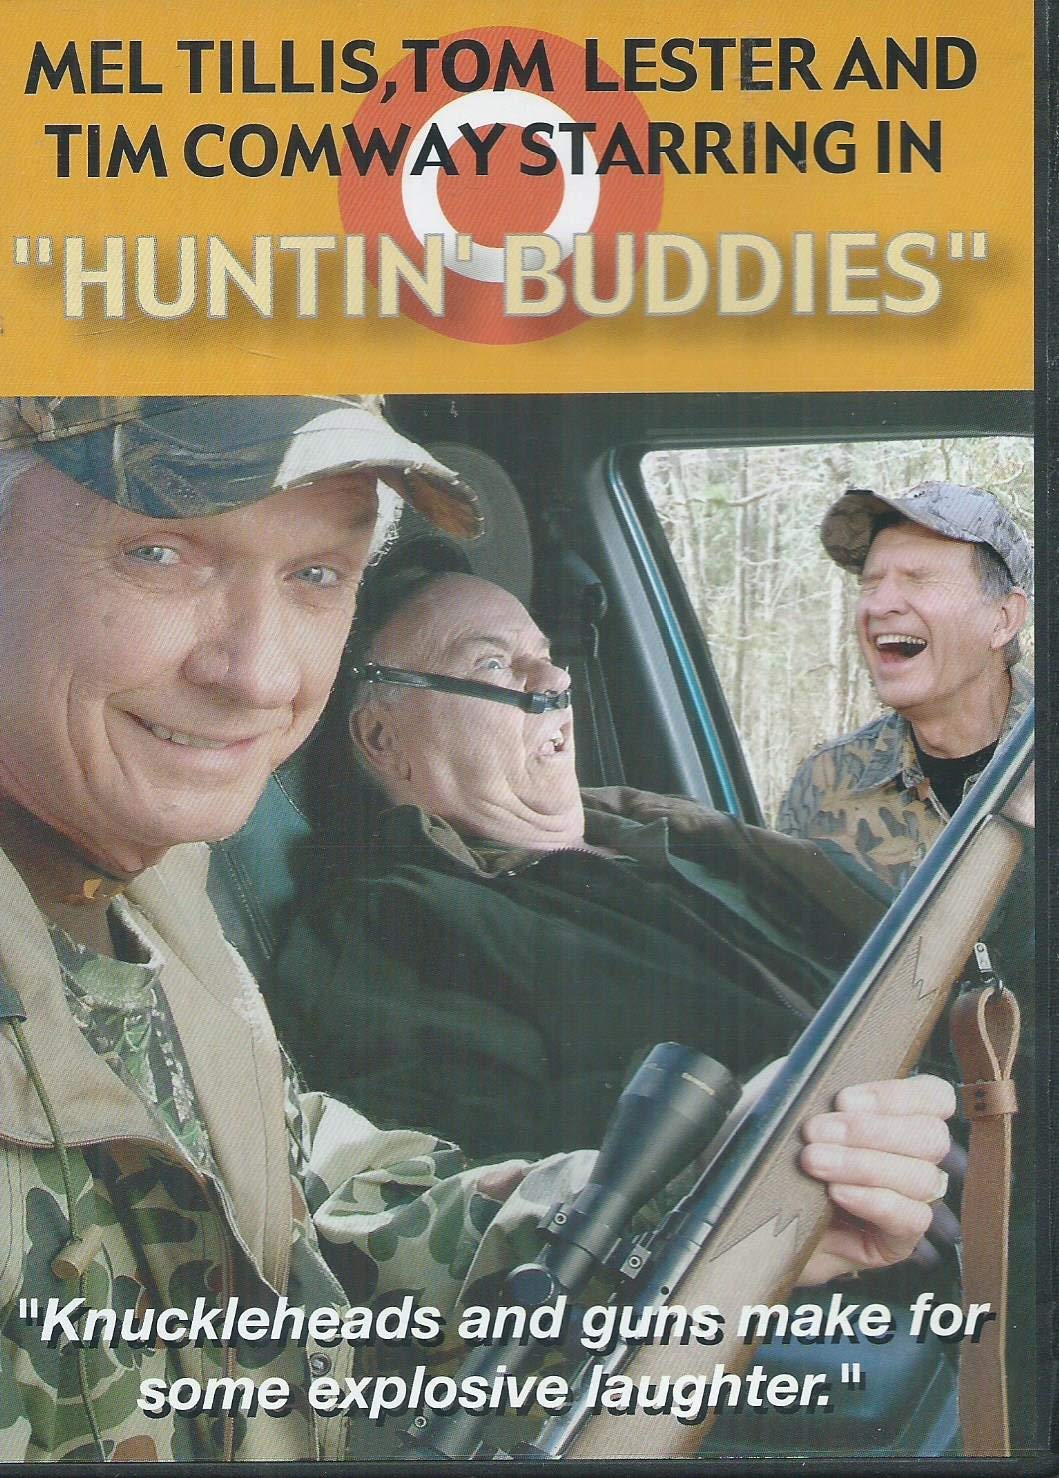 Huntin' Buddies